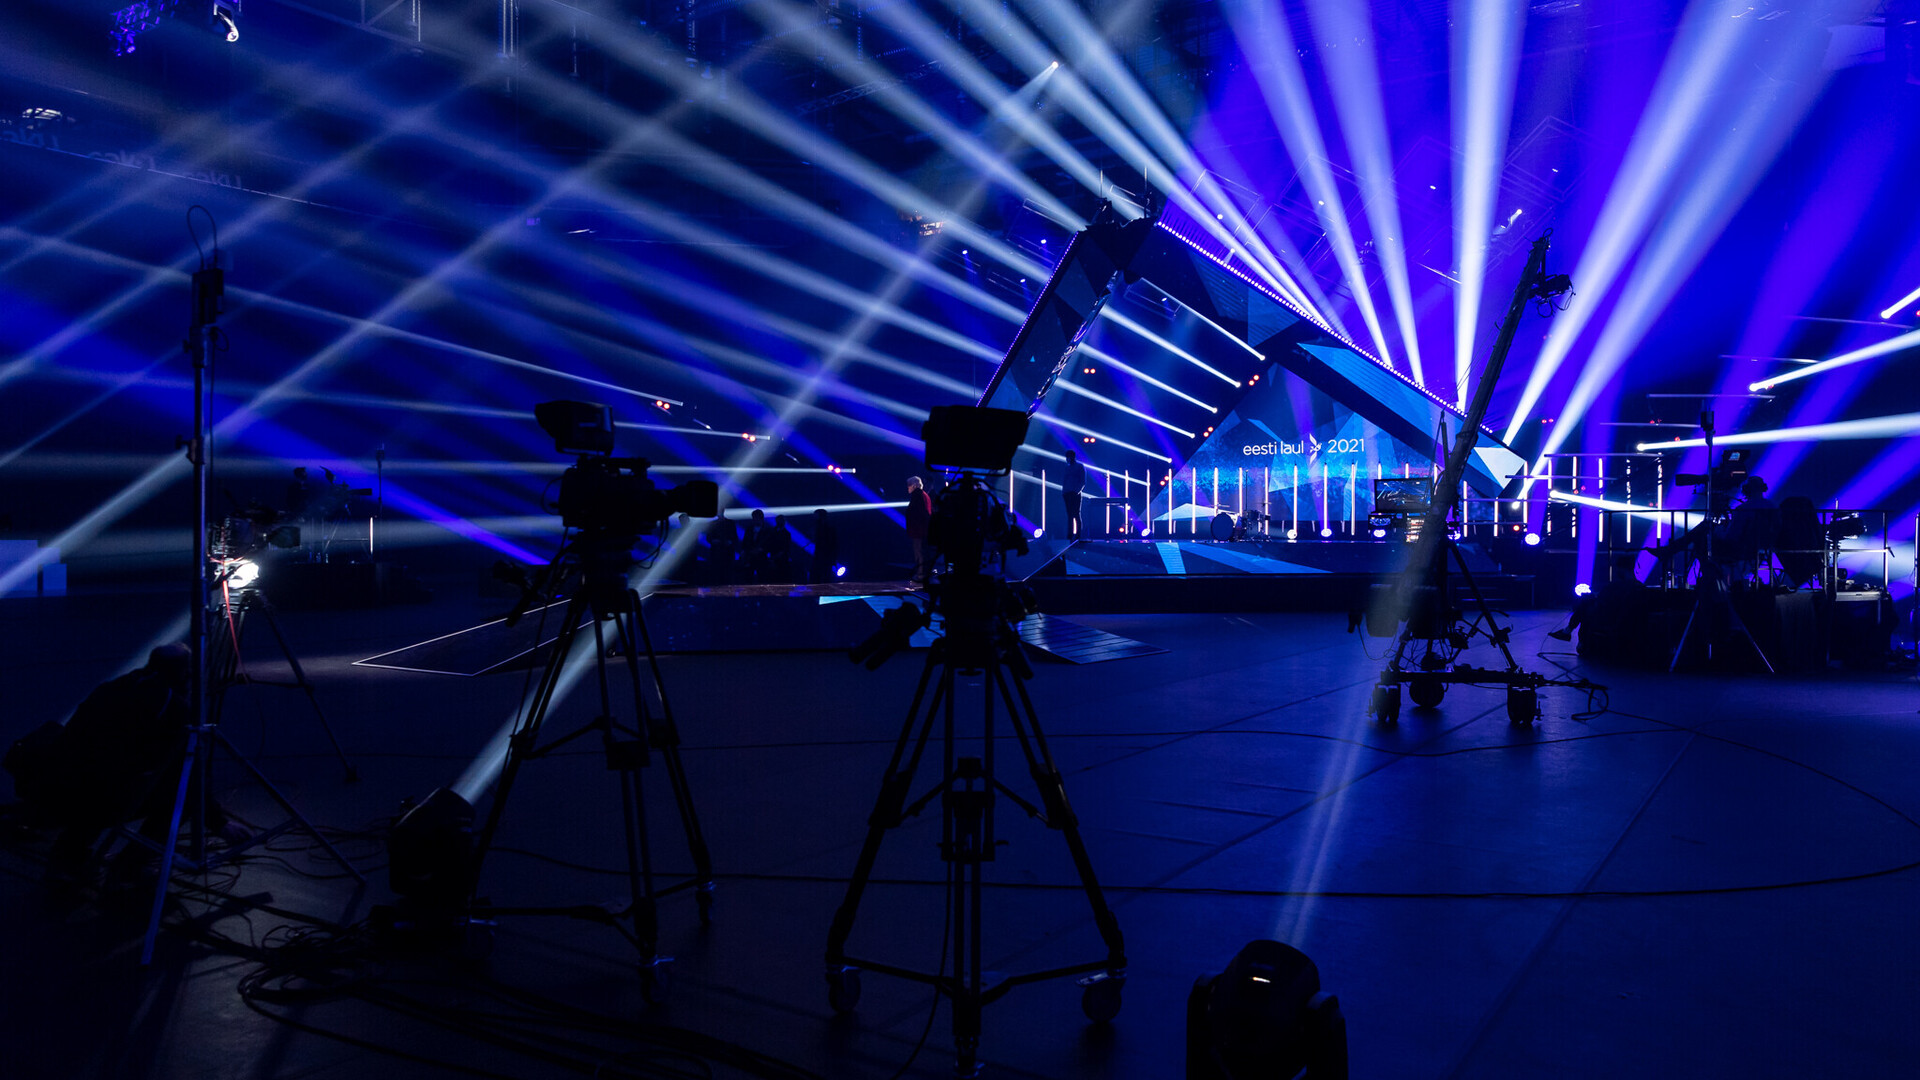 Tonight: Eesti Laul 2021 Grand Final to pick Estonia’s Eurovision 2021 act